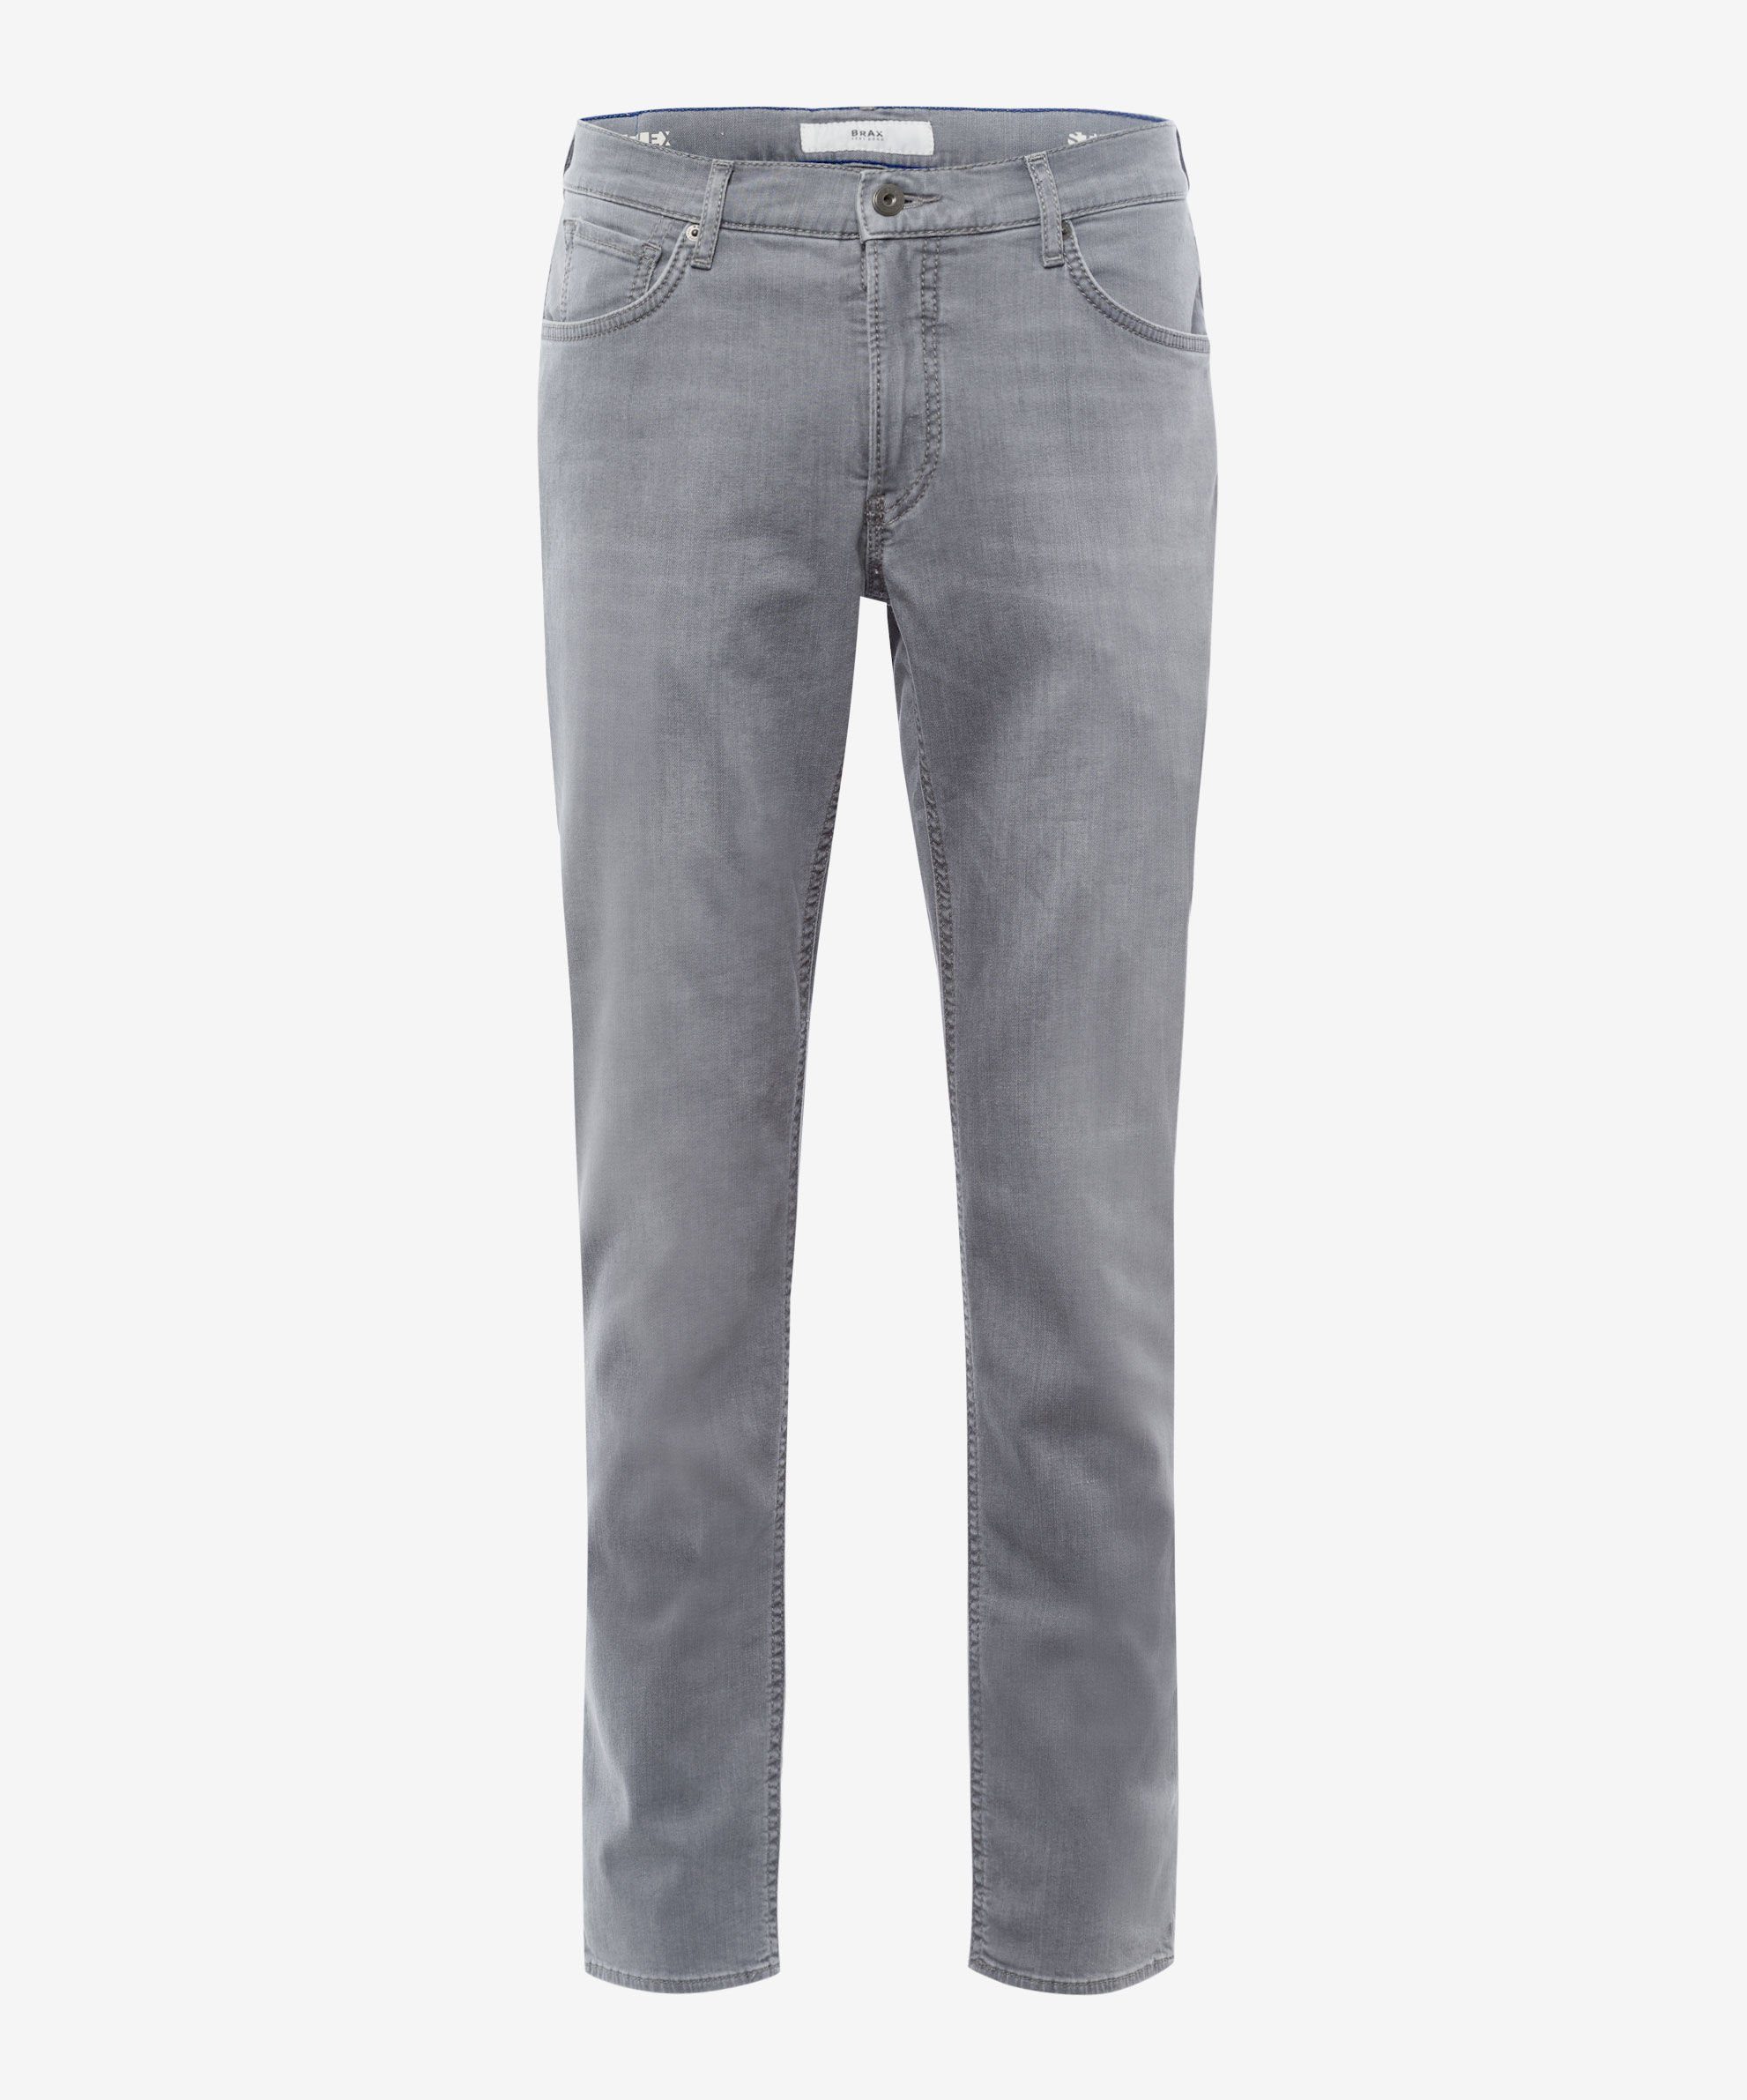 Brax 5-Pocket-Jeans Grey Light und Chuck Summer elastisch Denim, Light soft